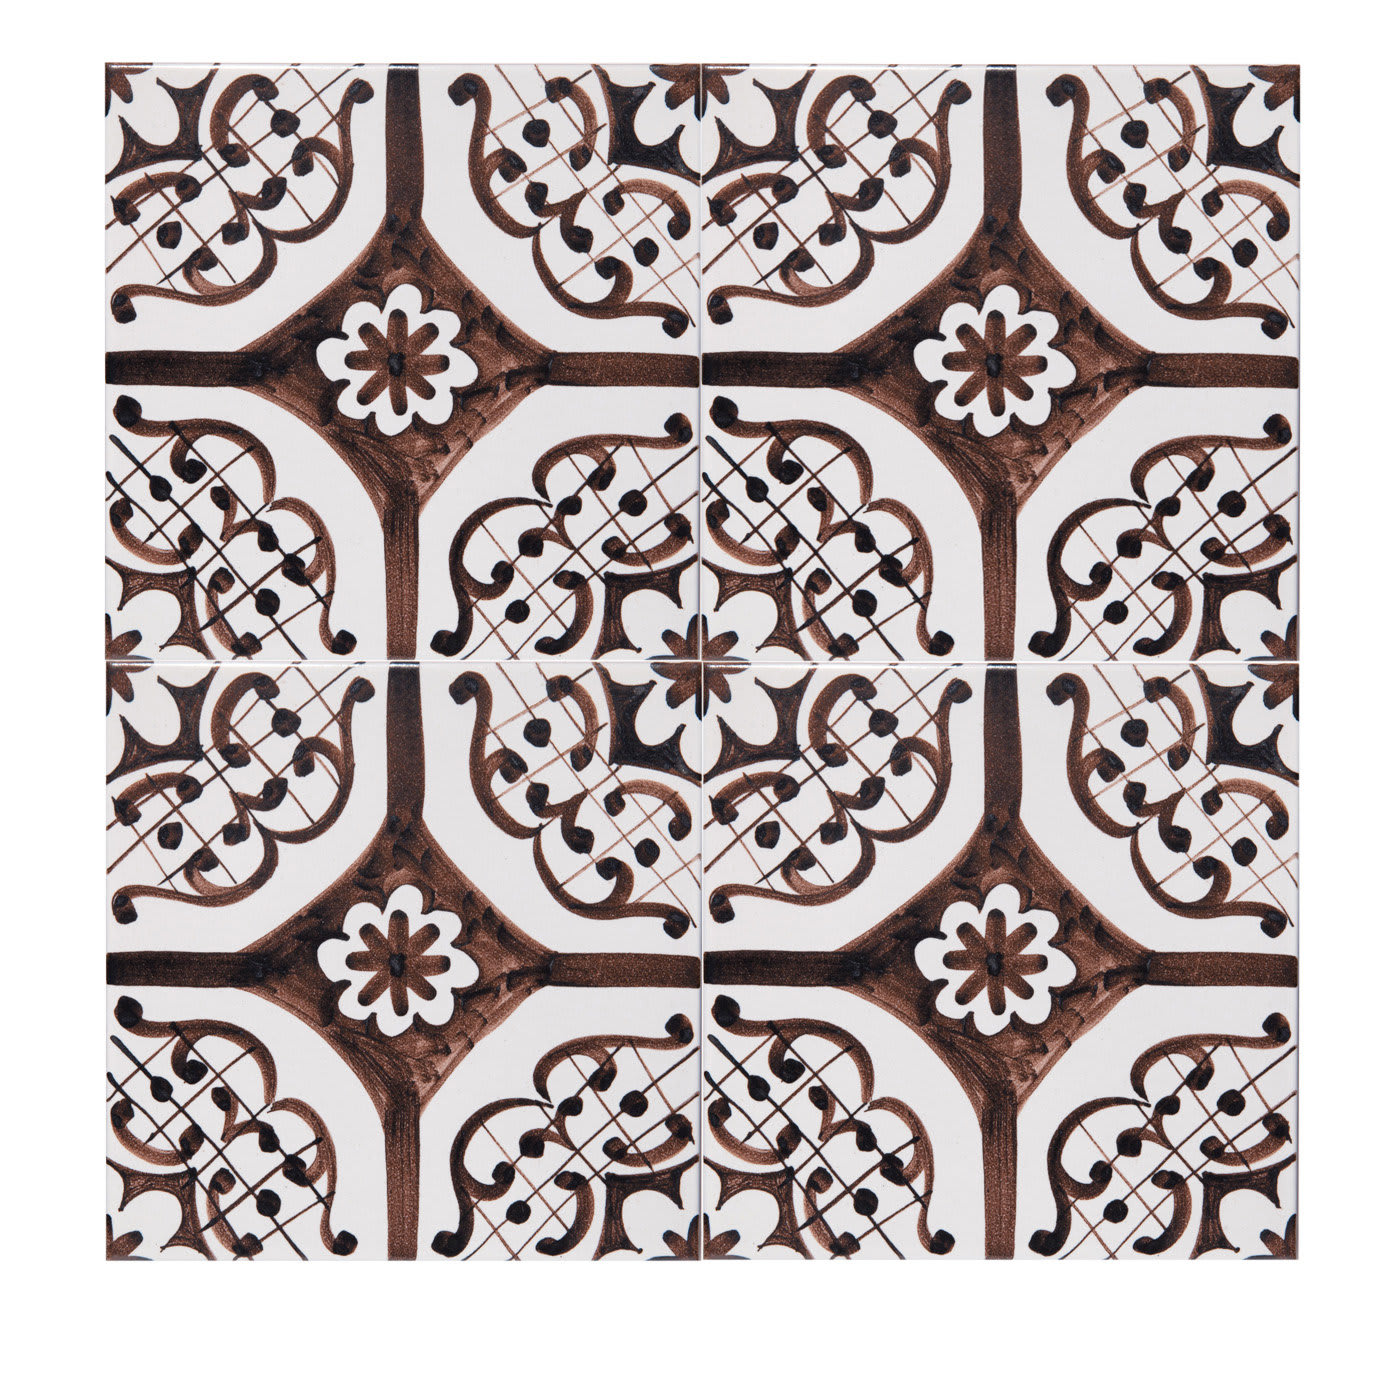 Set of 4 Century Tiles - Ceramica Pinto